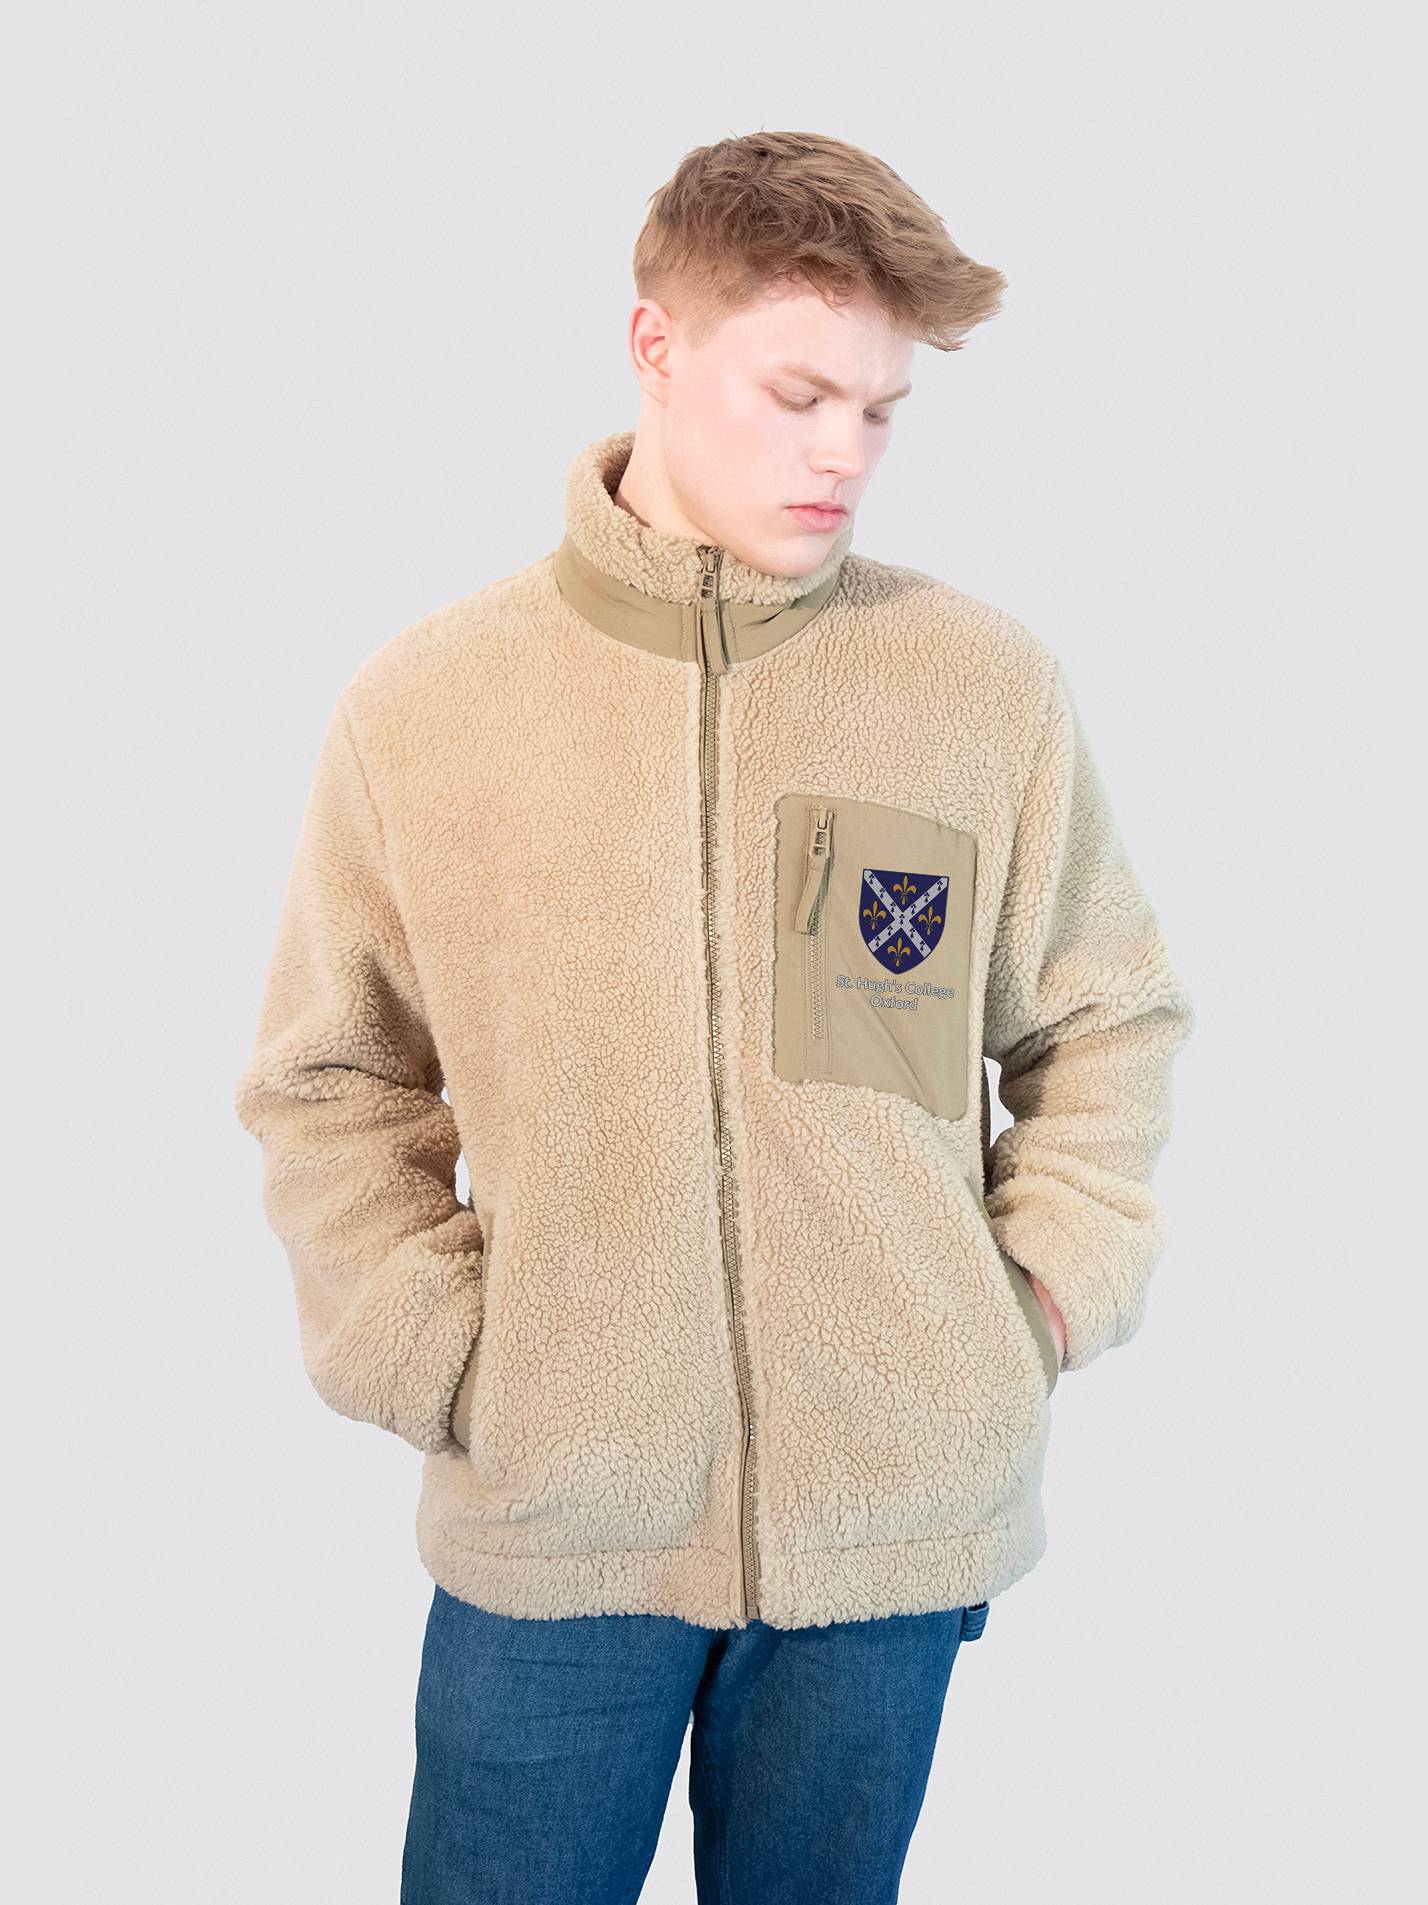 St Hugh's College Oxford Unisex Deep-Pile Sherpa Fleece Jacket